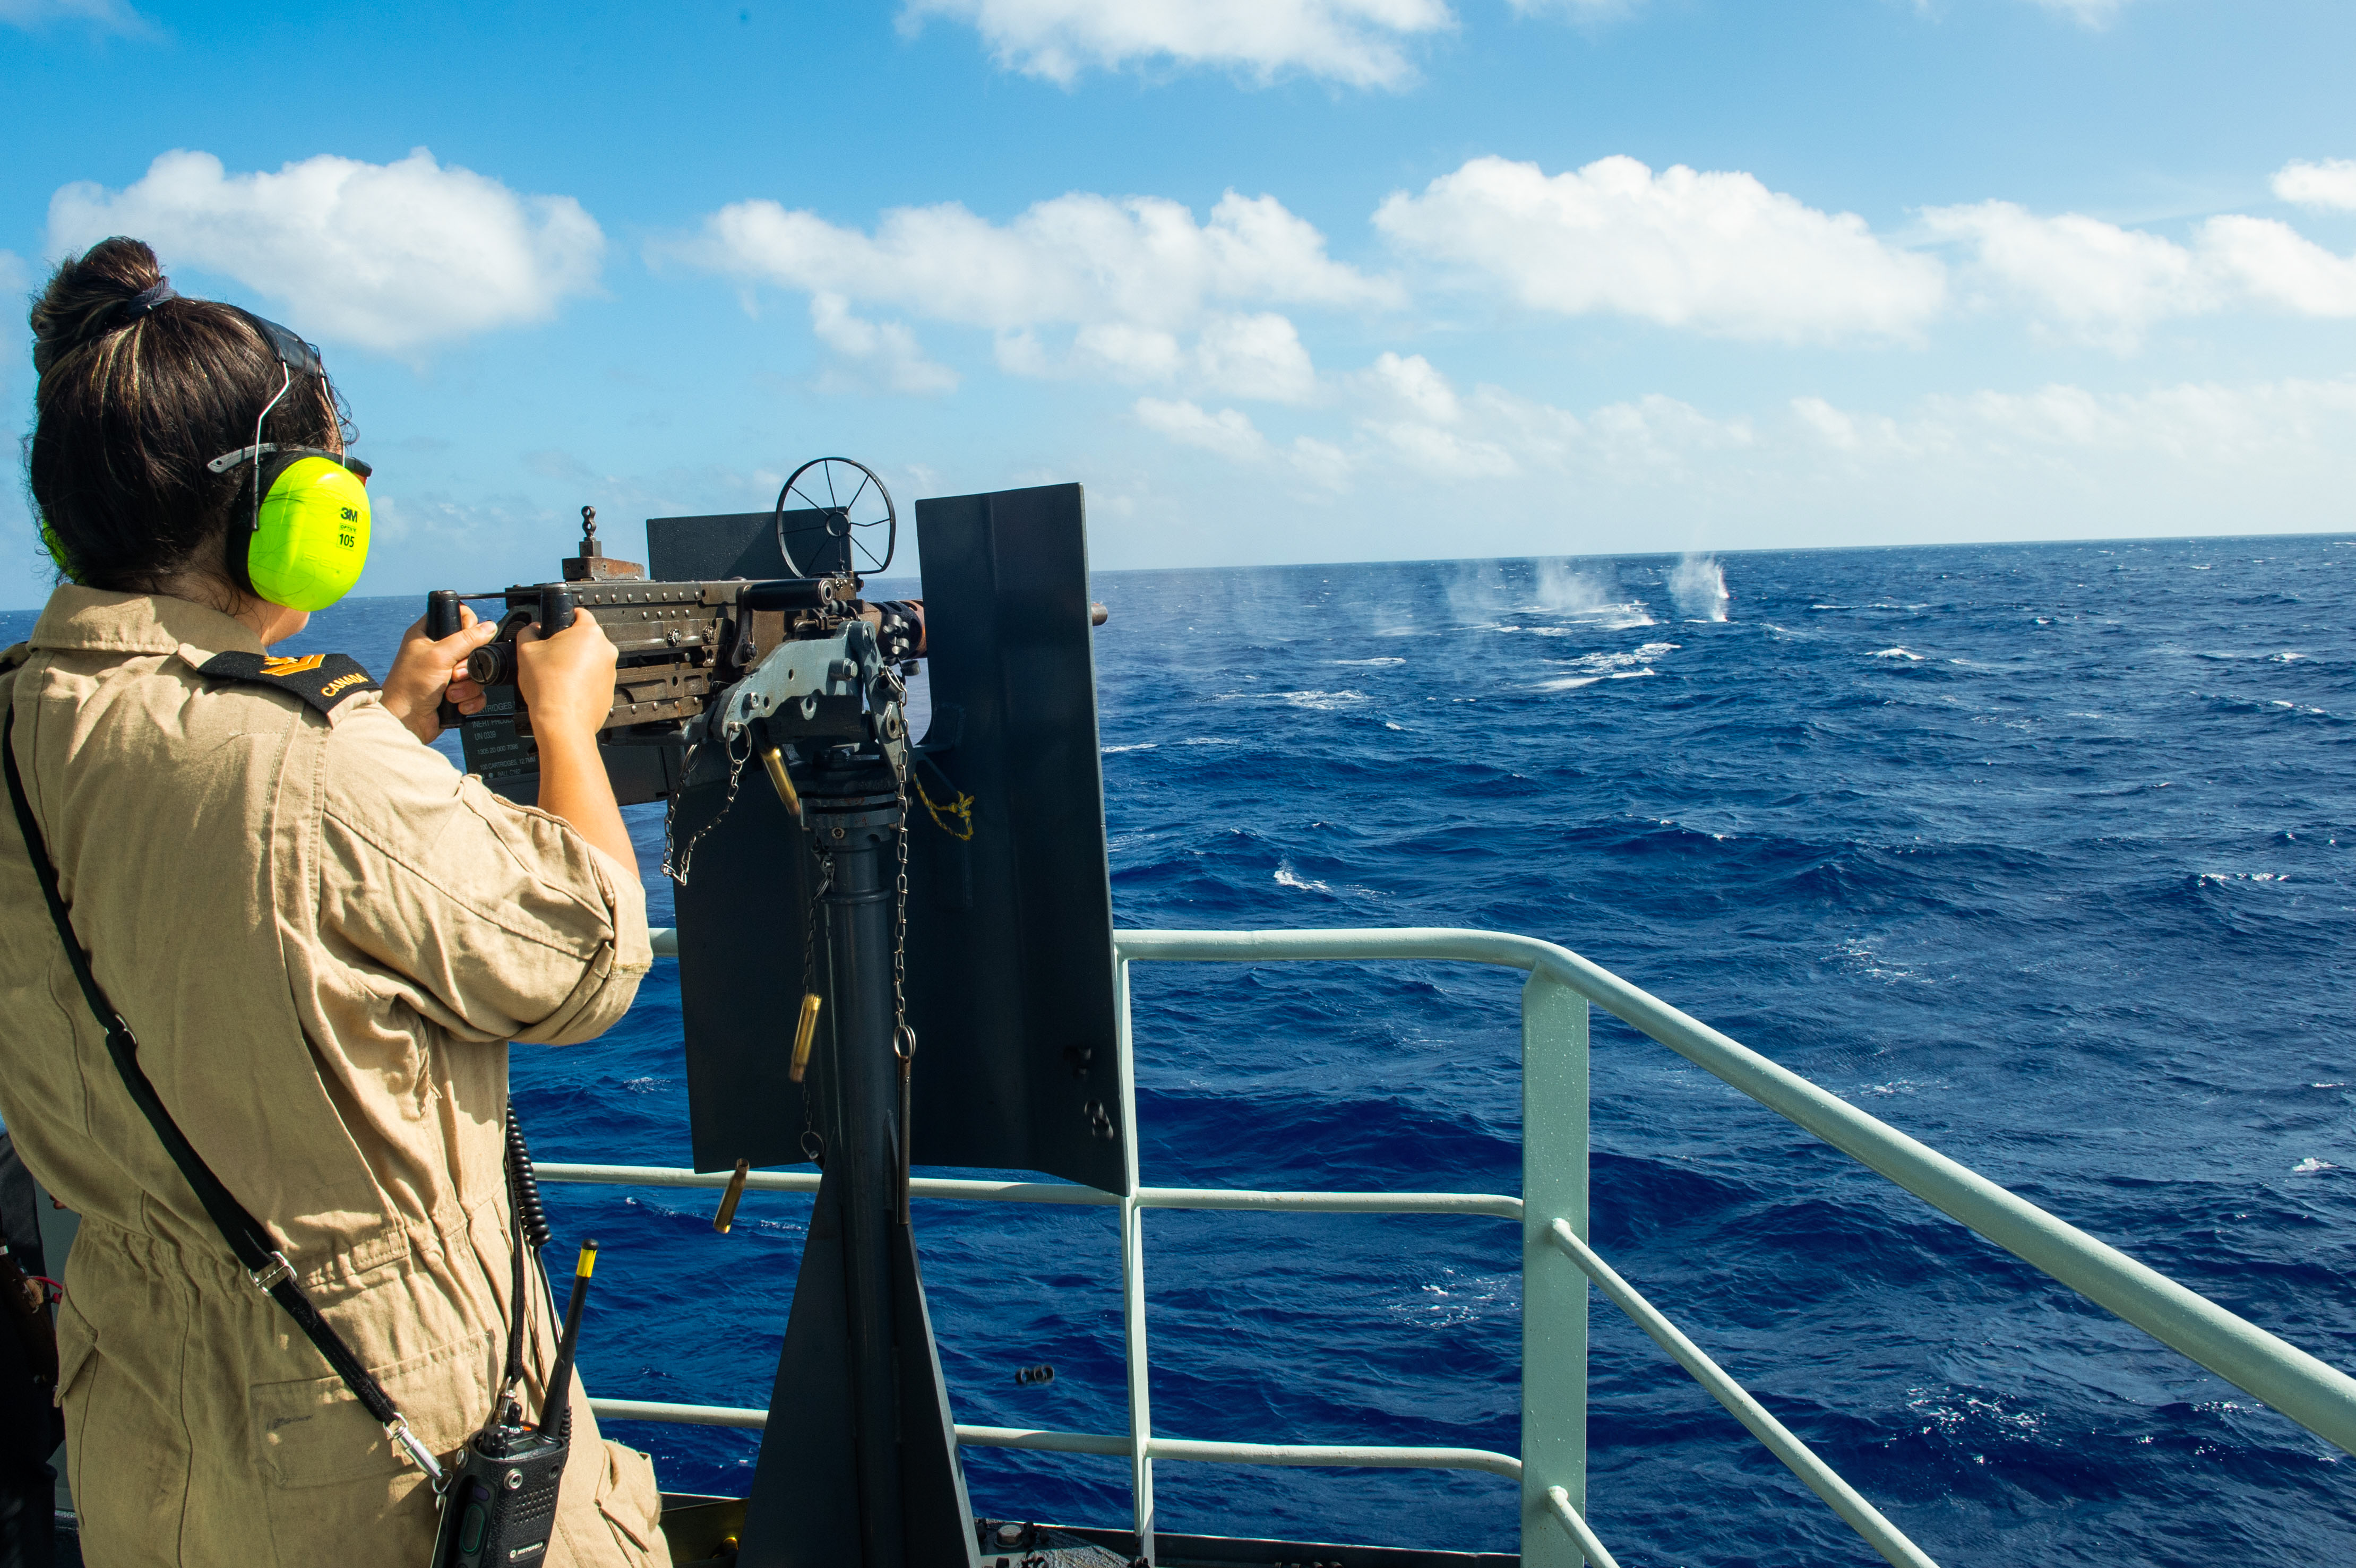 A crew member from HMCS Summerside operates the .50 cal machine gun